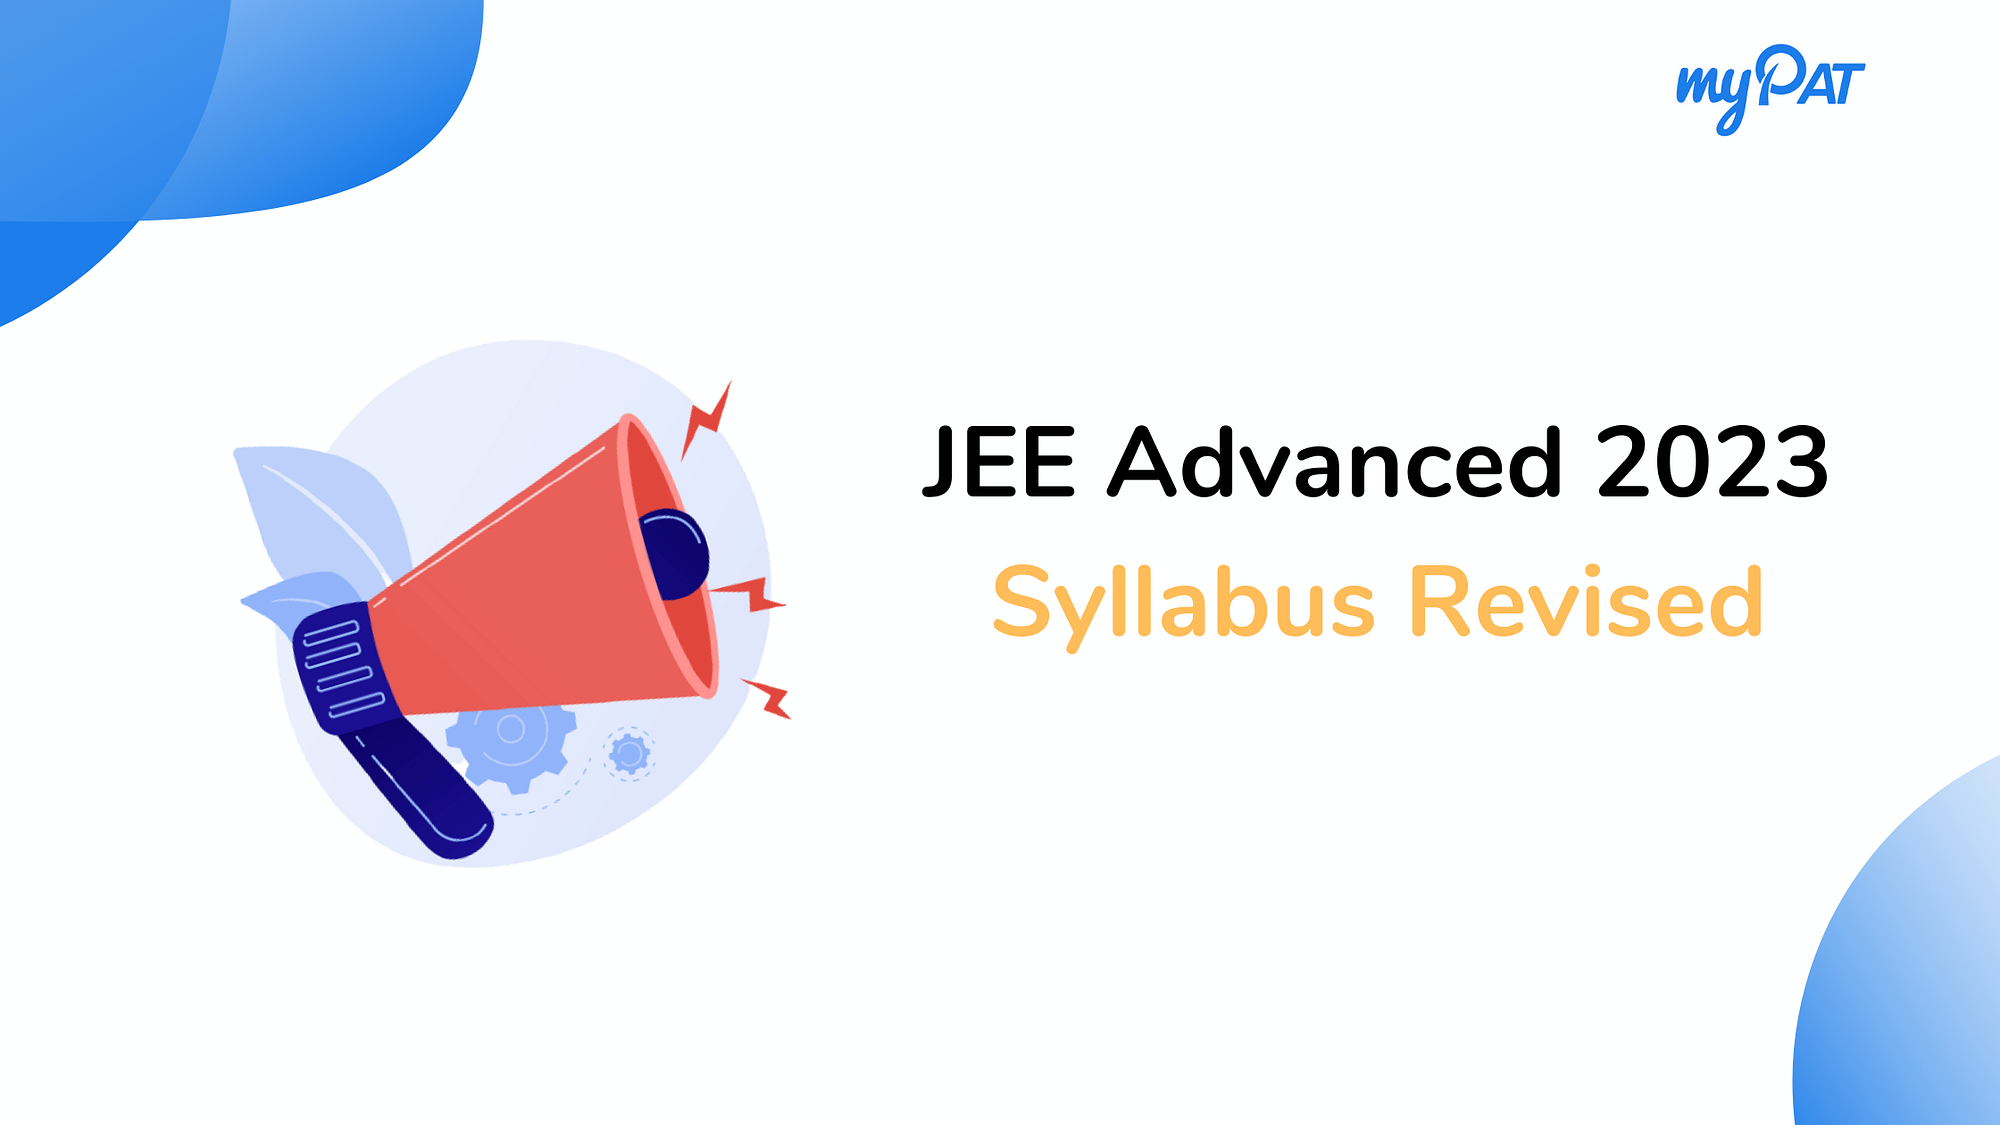 JEE Advanced 2023 Exam Syllabus Revised, Check Here